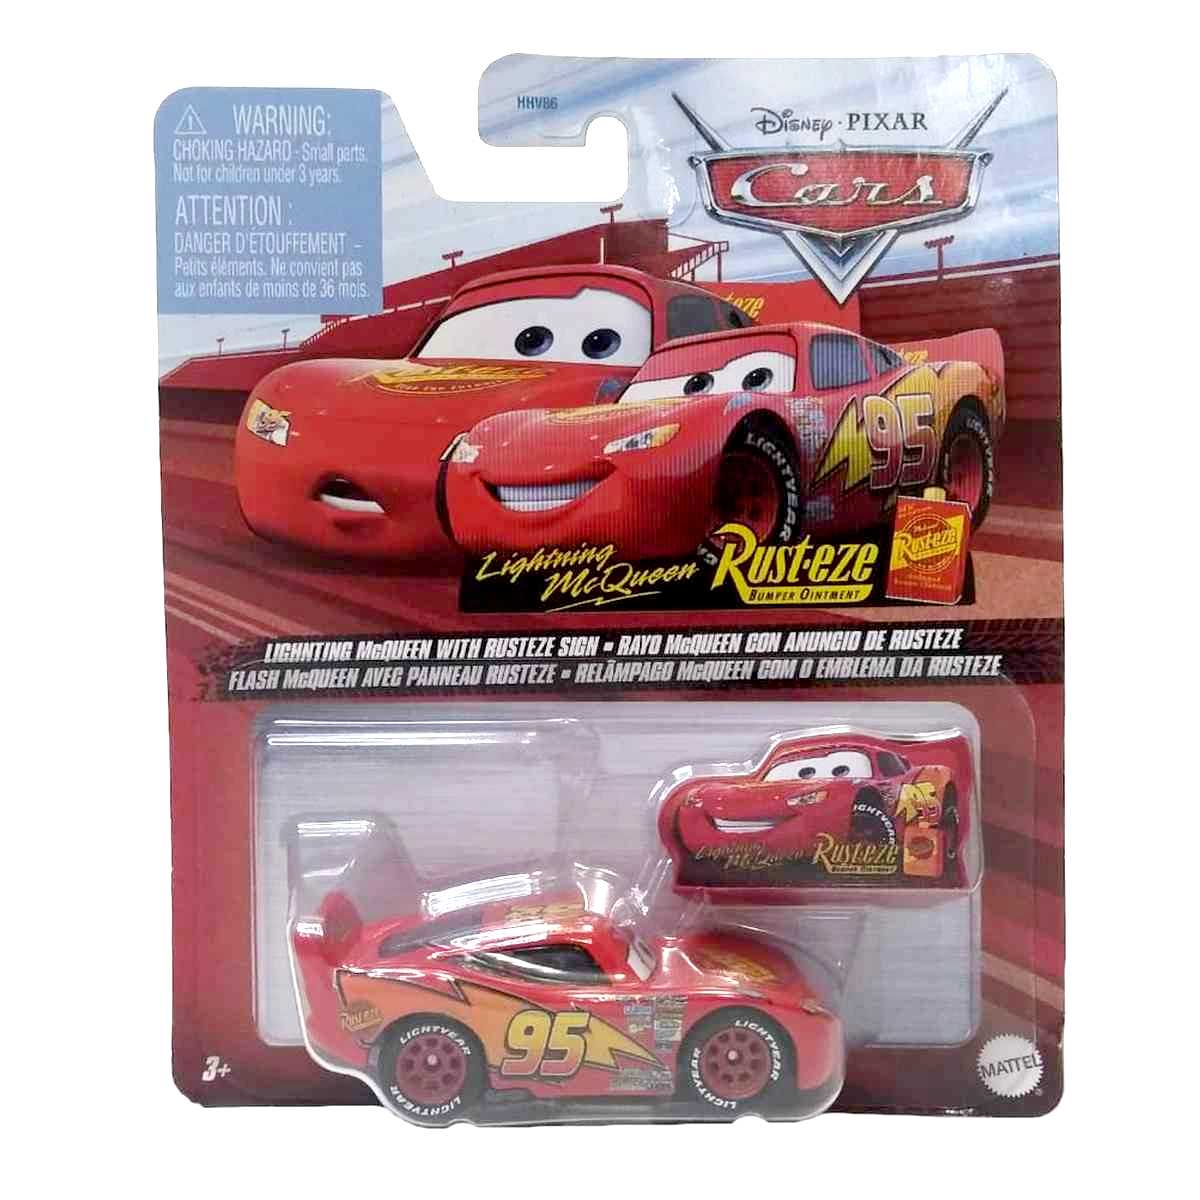 Disney Pixar Cars Carros Lightning McQueen Rust-eze + Display DXV29 HHV86 GCC81 escala 1/55